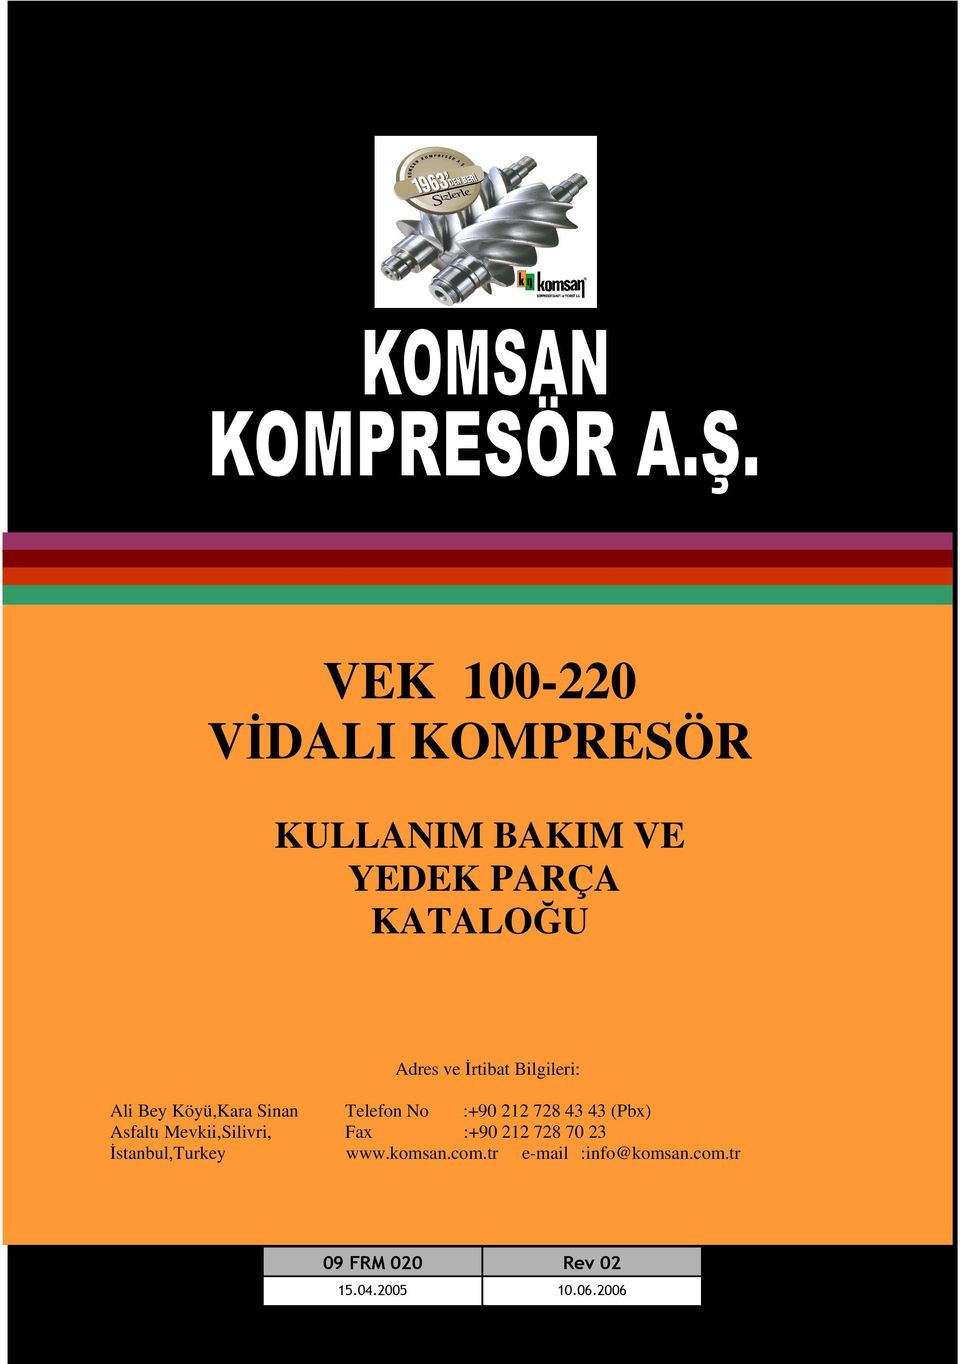 (Pbx) Asfaltı Mevkii,Silivri, Fax :+90 212 728 70 23 İstanbul,Turkey www.